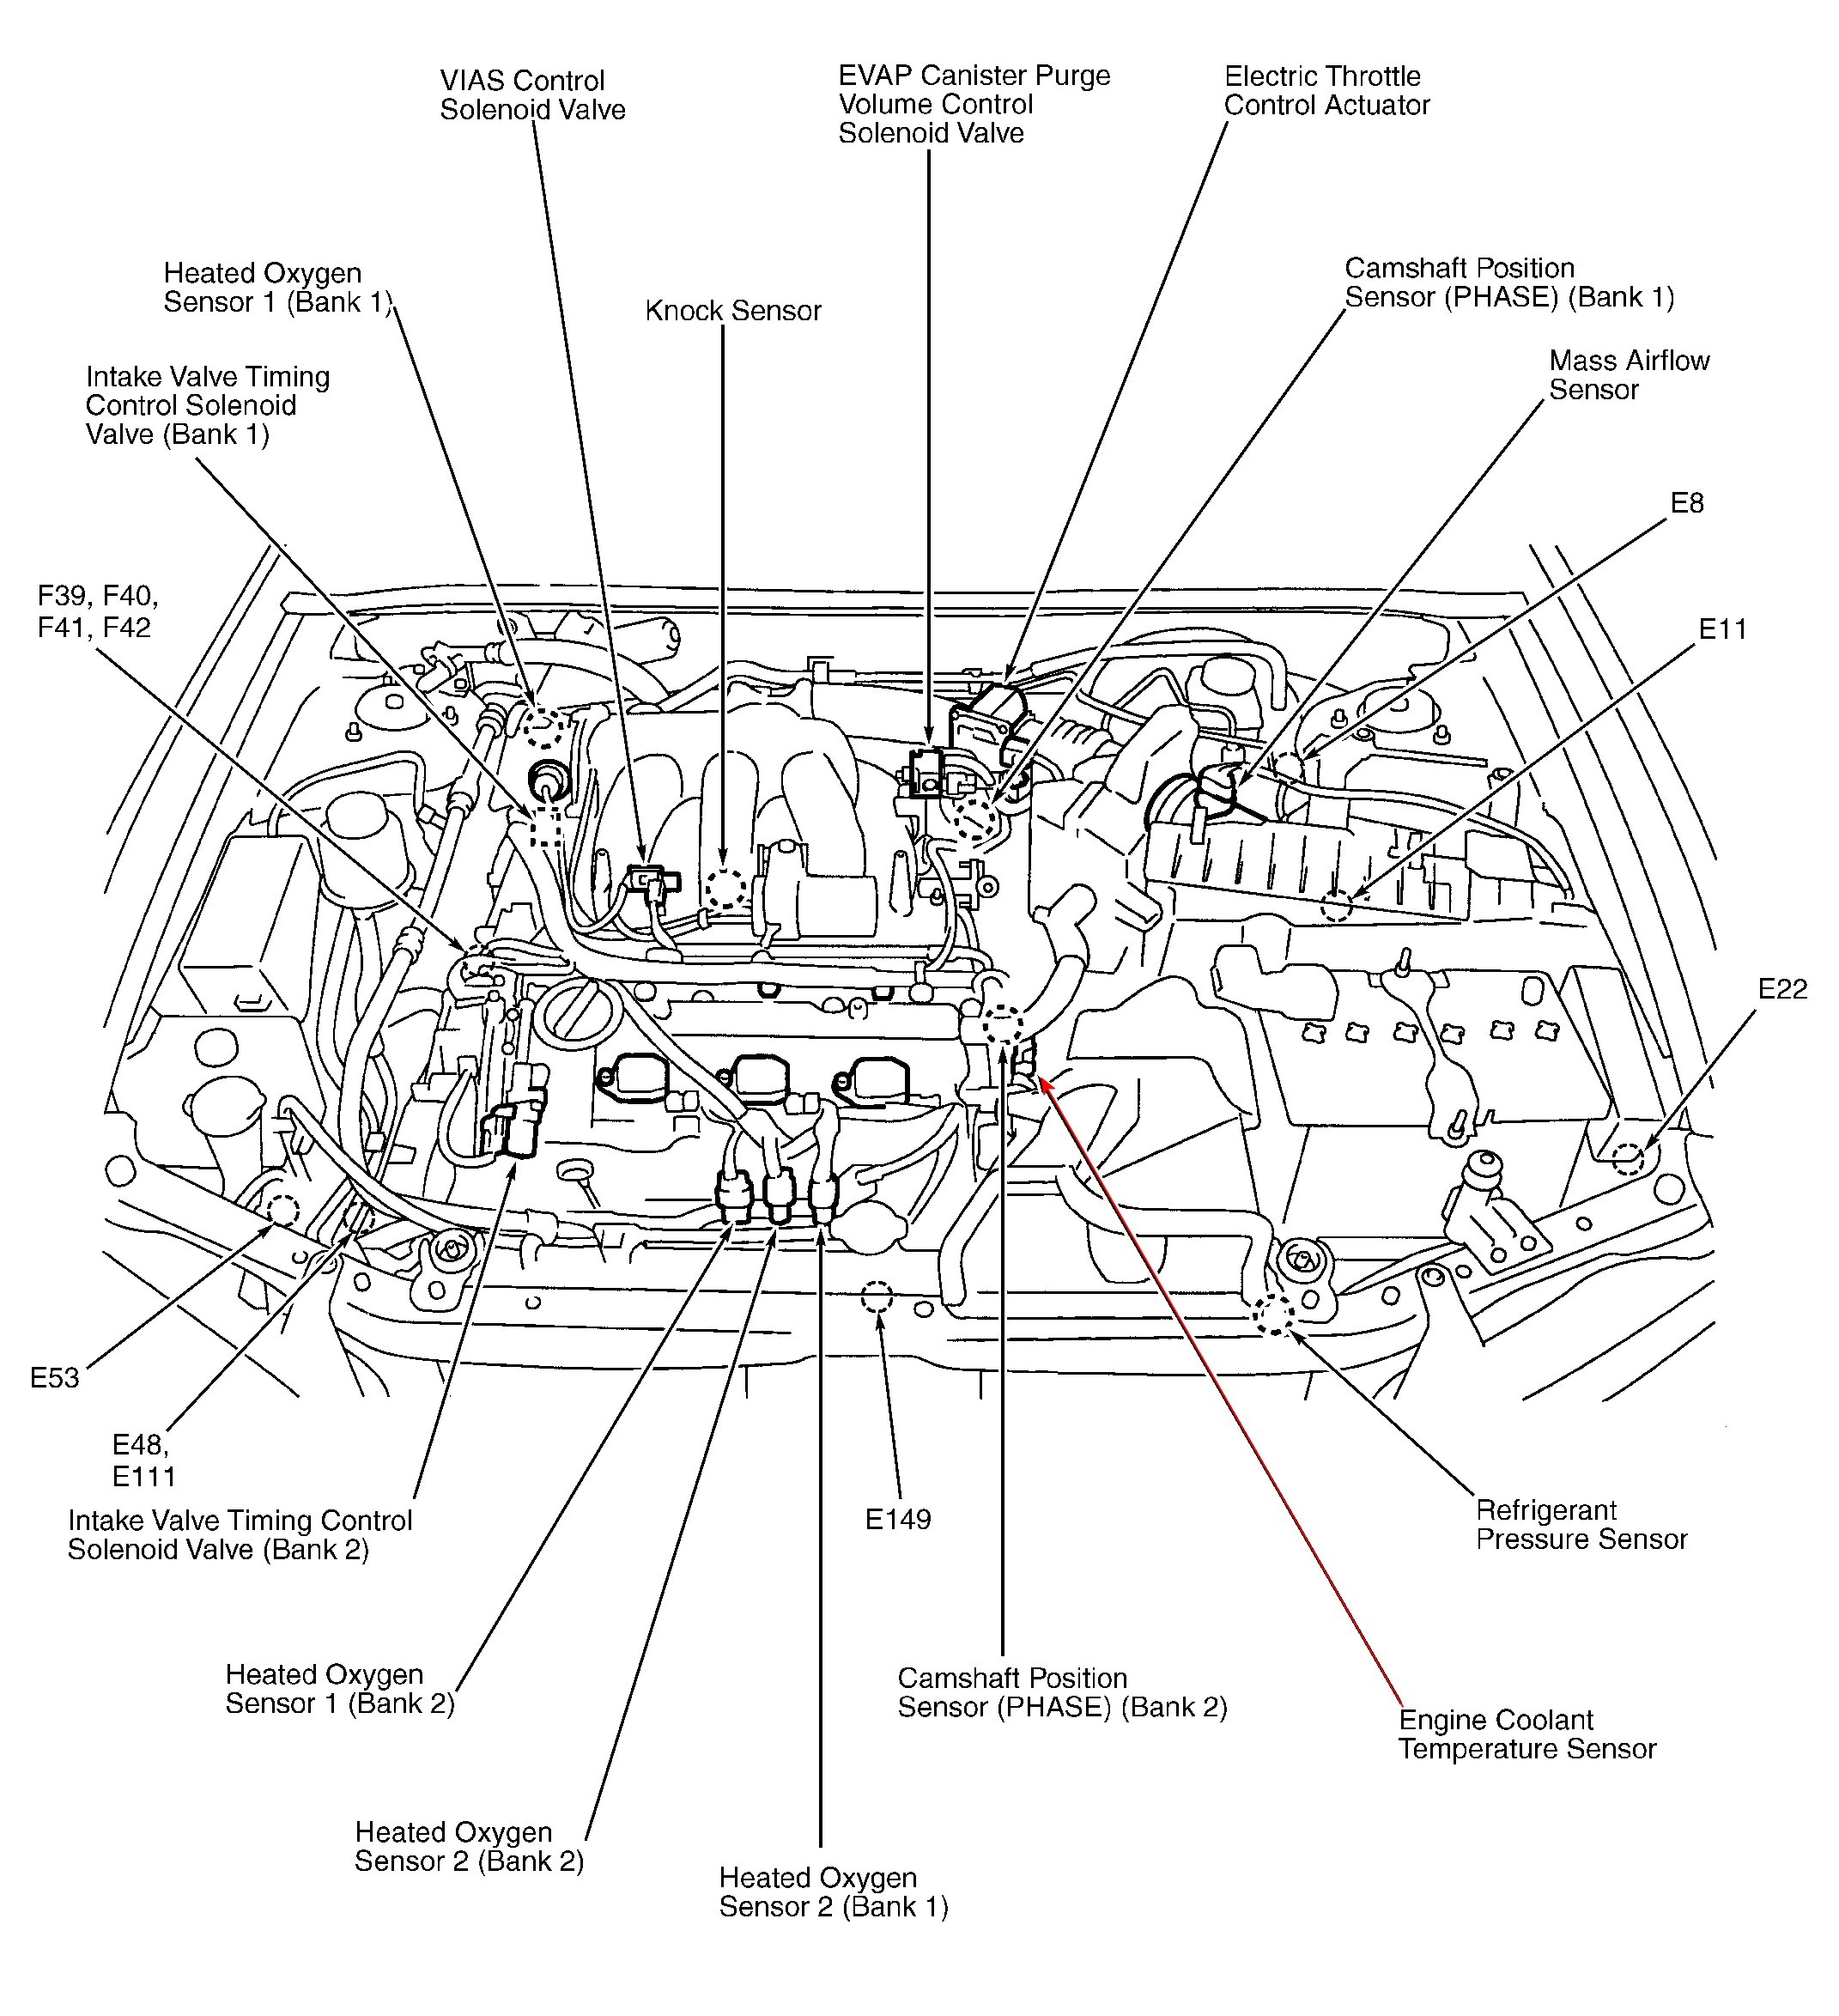 1993 Nissan Sentra Engine Diagram 92 Nissan Sentra Engine Diagram Wiring Diagram Used Of 1993 Nissan Sentra Engine Diagram